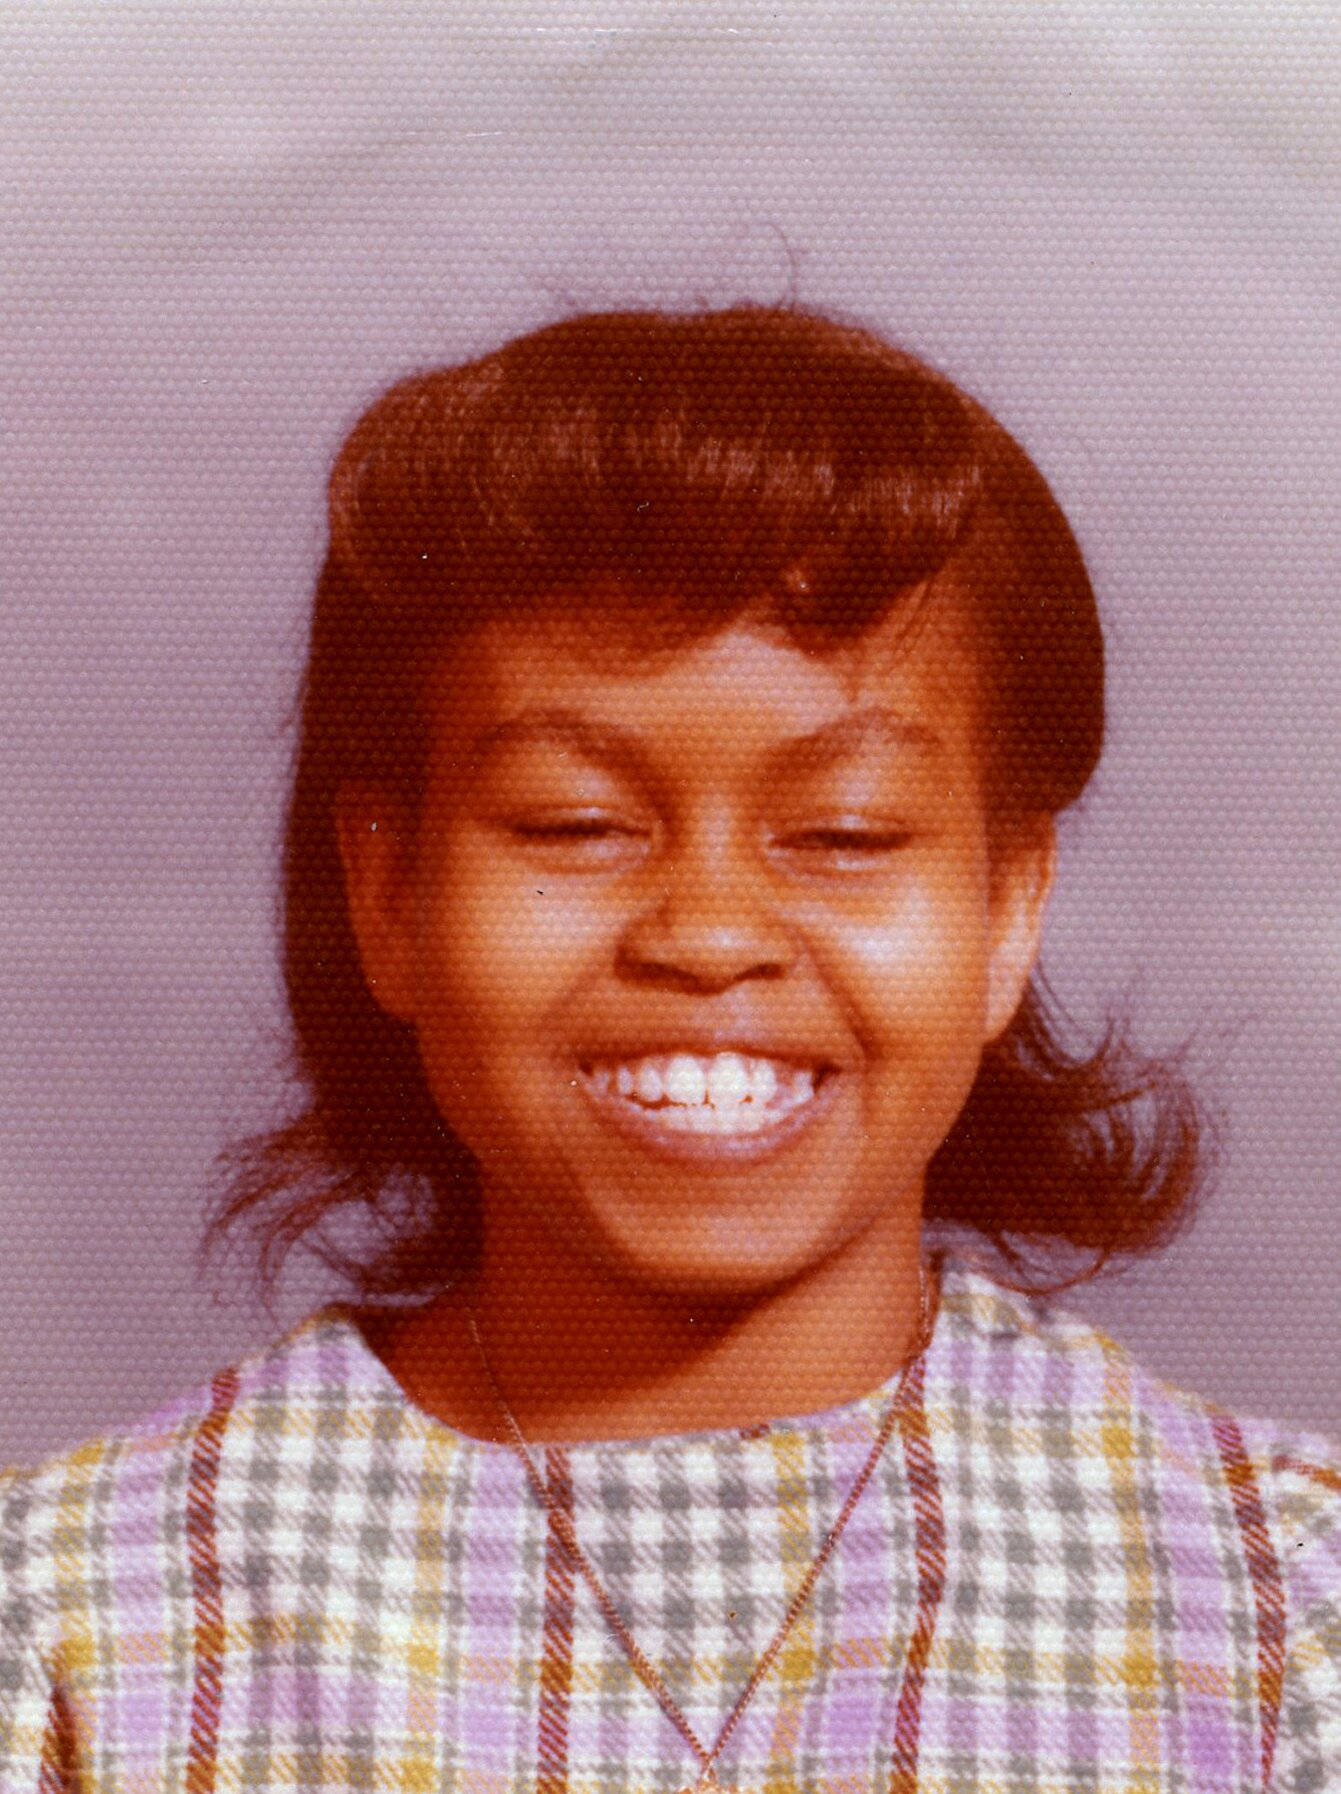 Michelle Obama As A Child Wallpaper